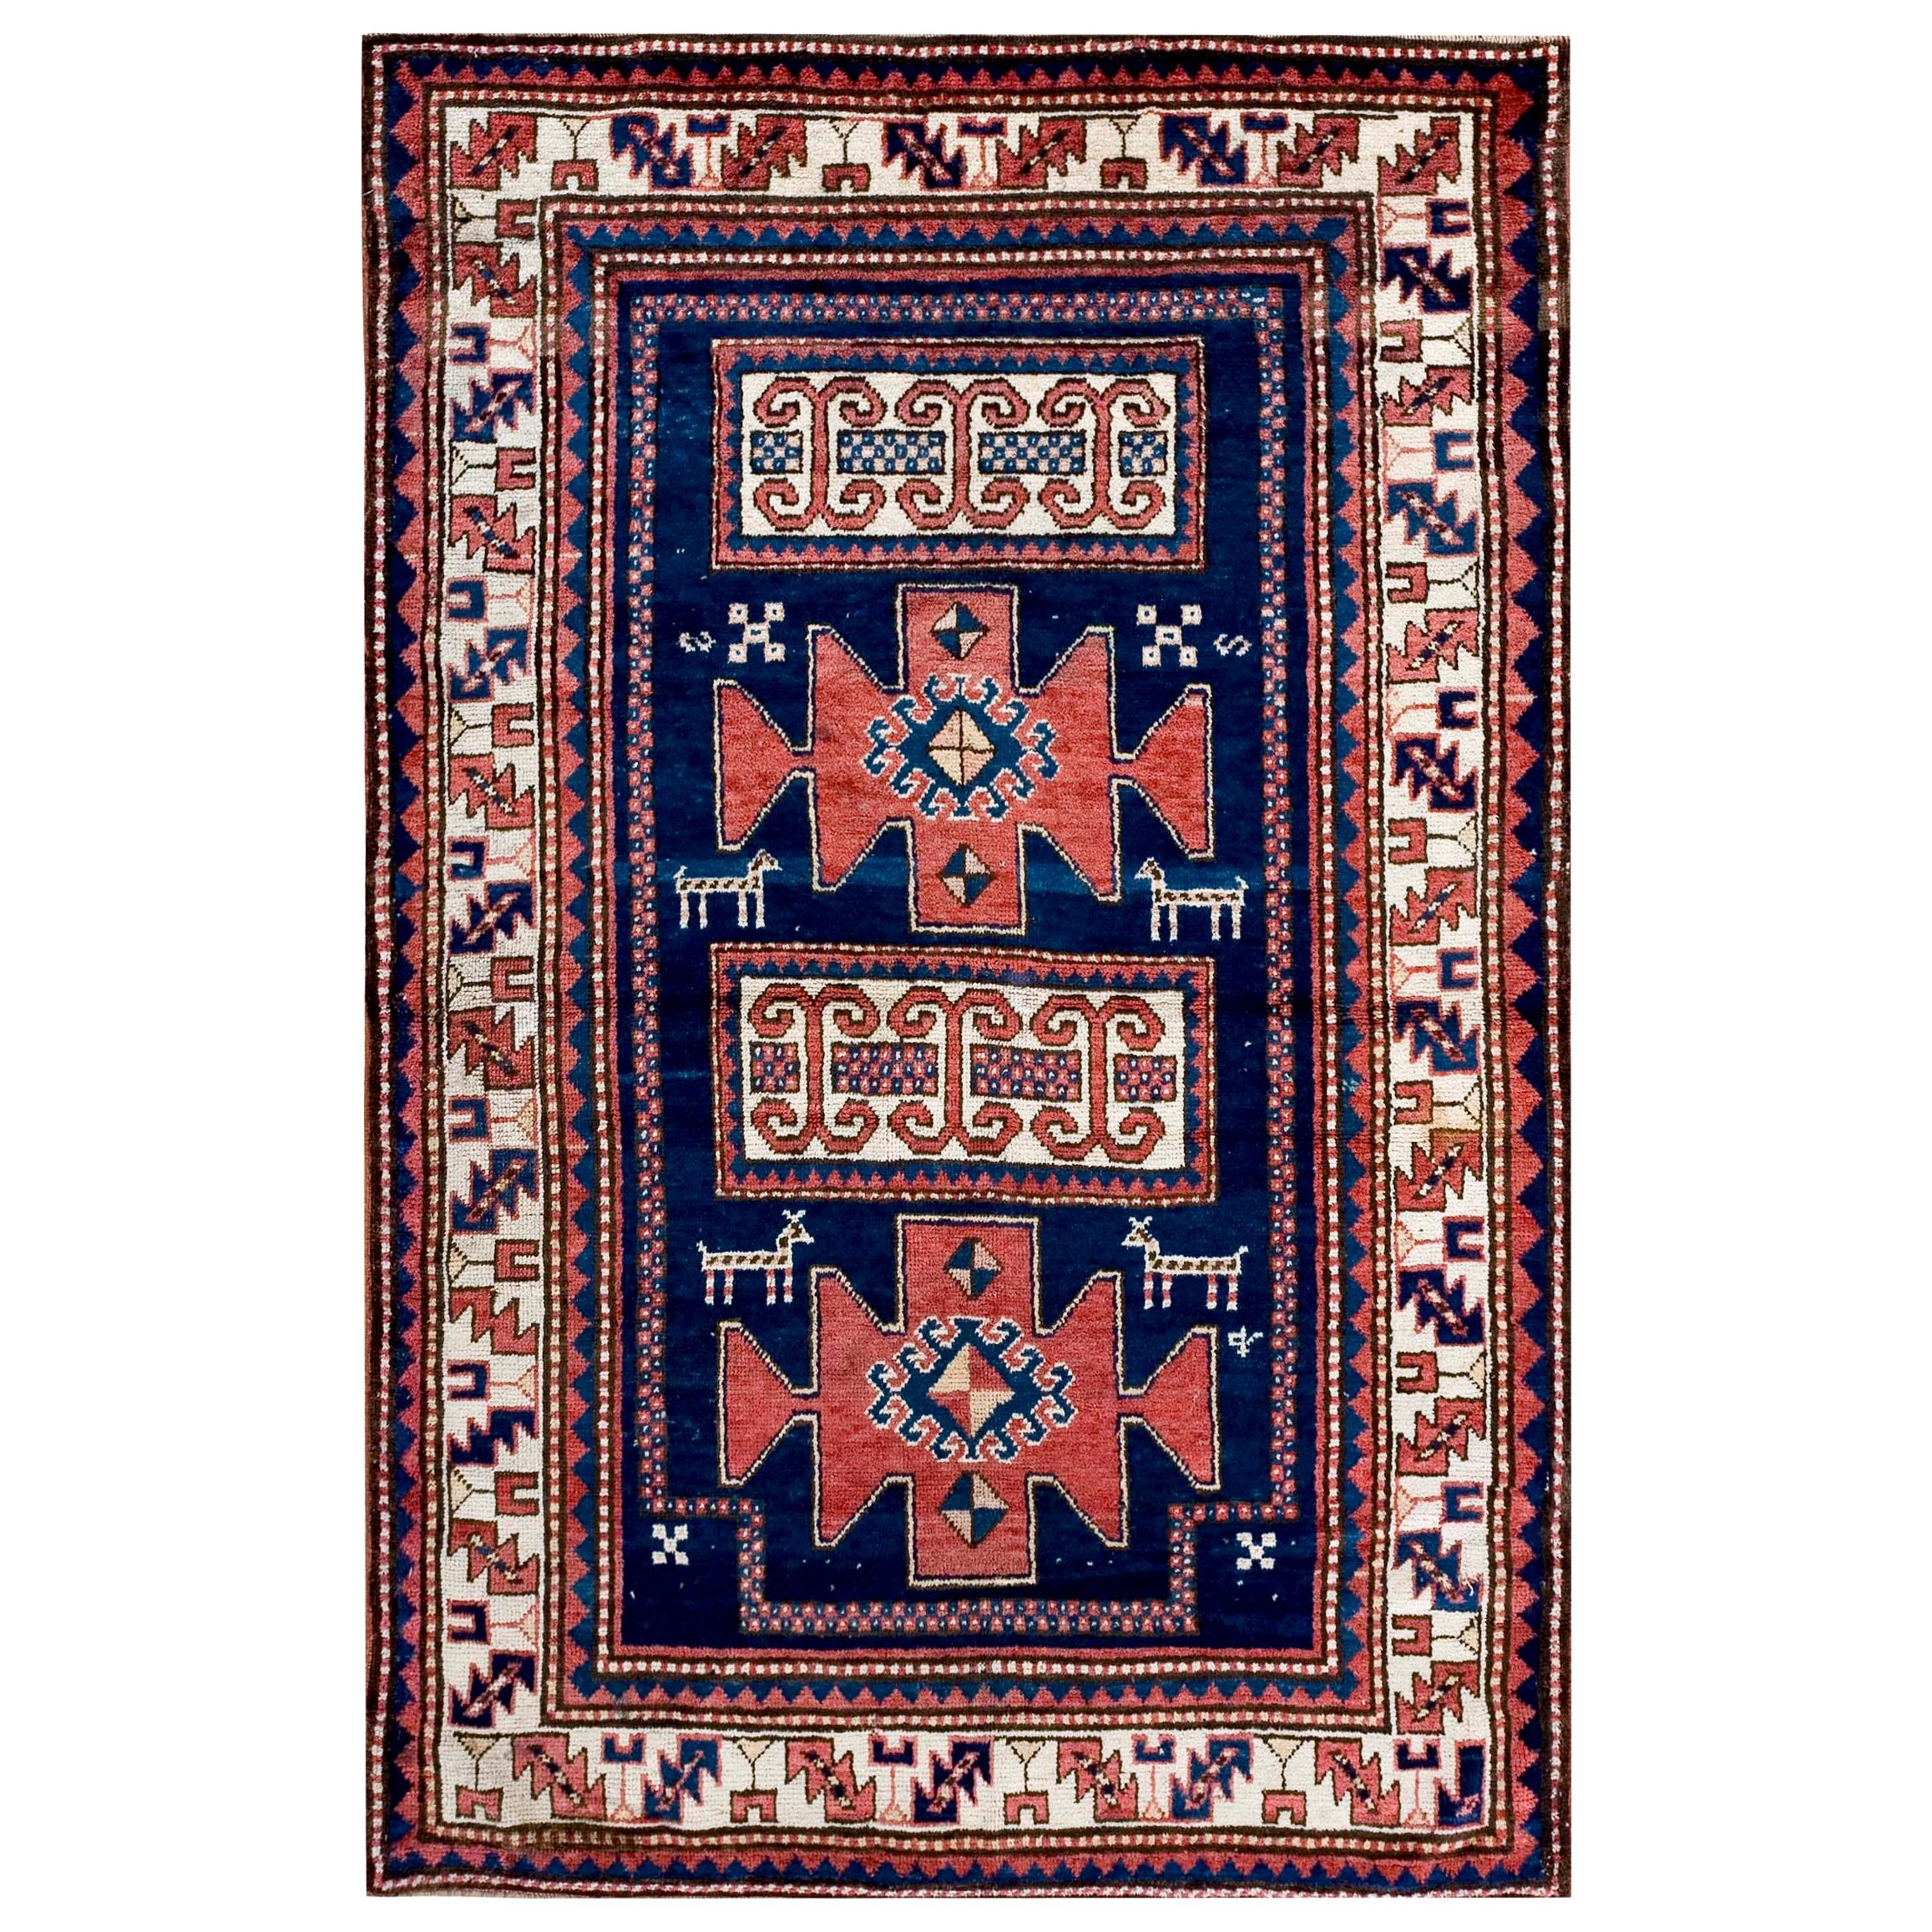 Early 20th Century Caucasian Kazak Carpet ( 4'4" x 6'6" - 132 x 198 )